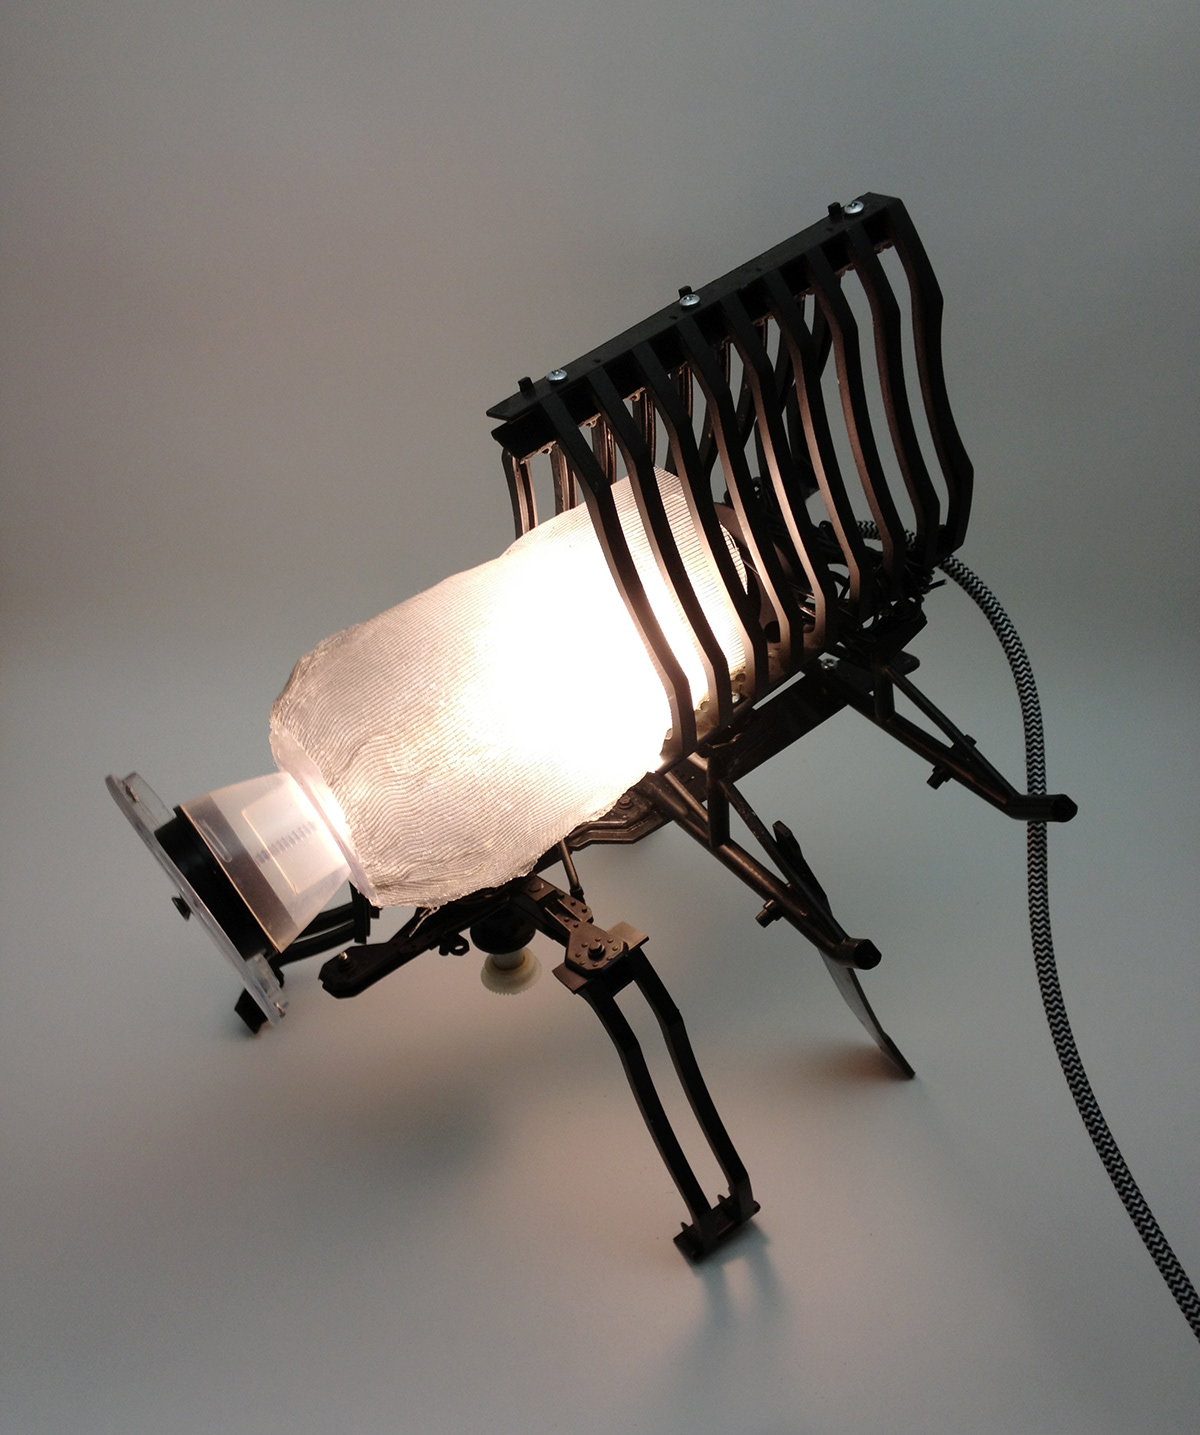 Lighting Design  lamp design 3d design custom lighting recycling recycled materials repurposed materials